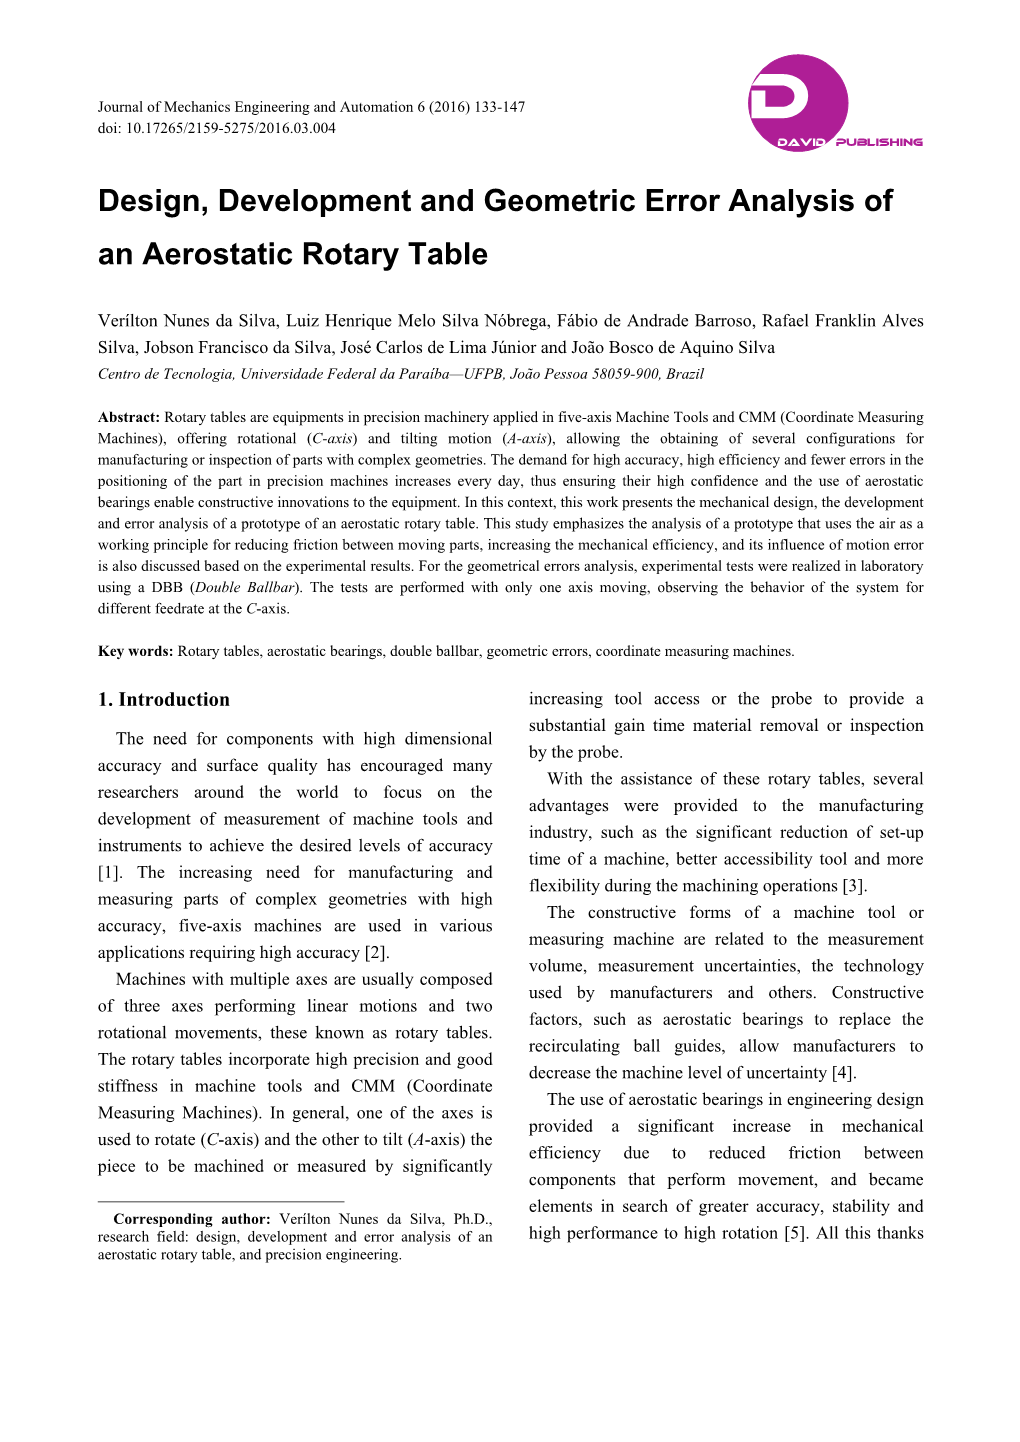 Design, Development and Geometric Error Analysis of an Aerostatic Rotary Table